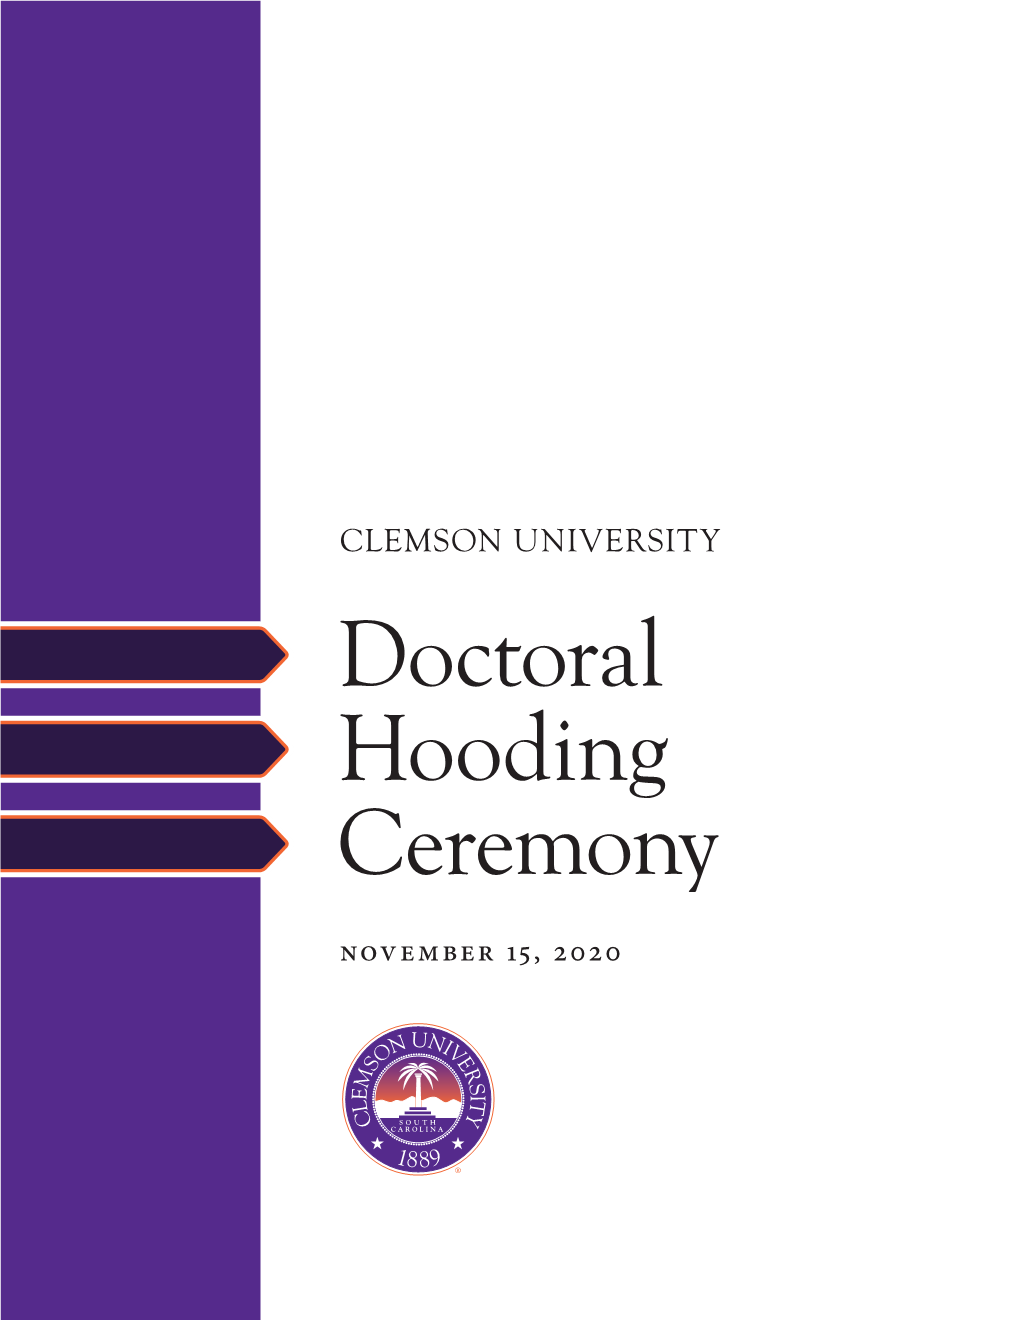 Clemson University Doctoral Hooding Ceremony Program, November 2020